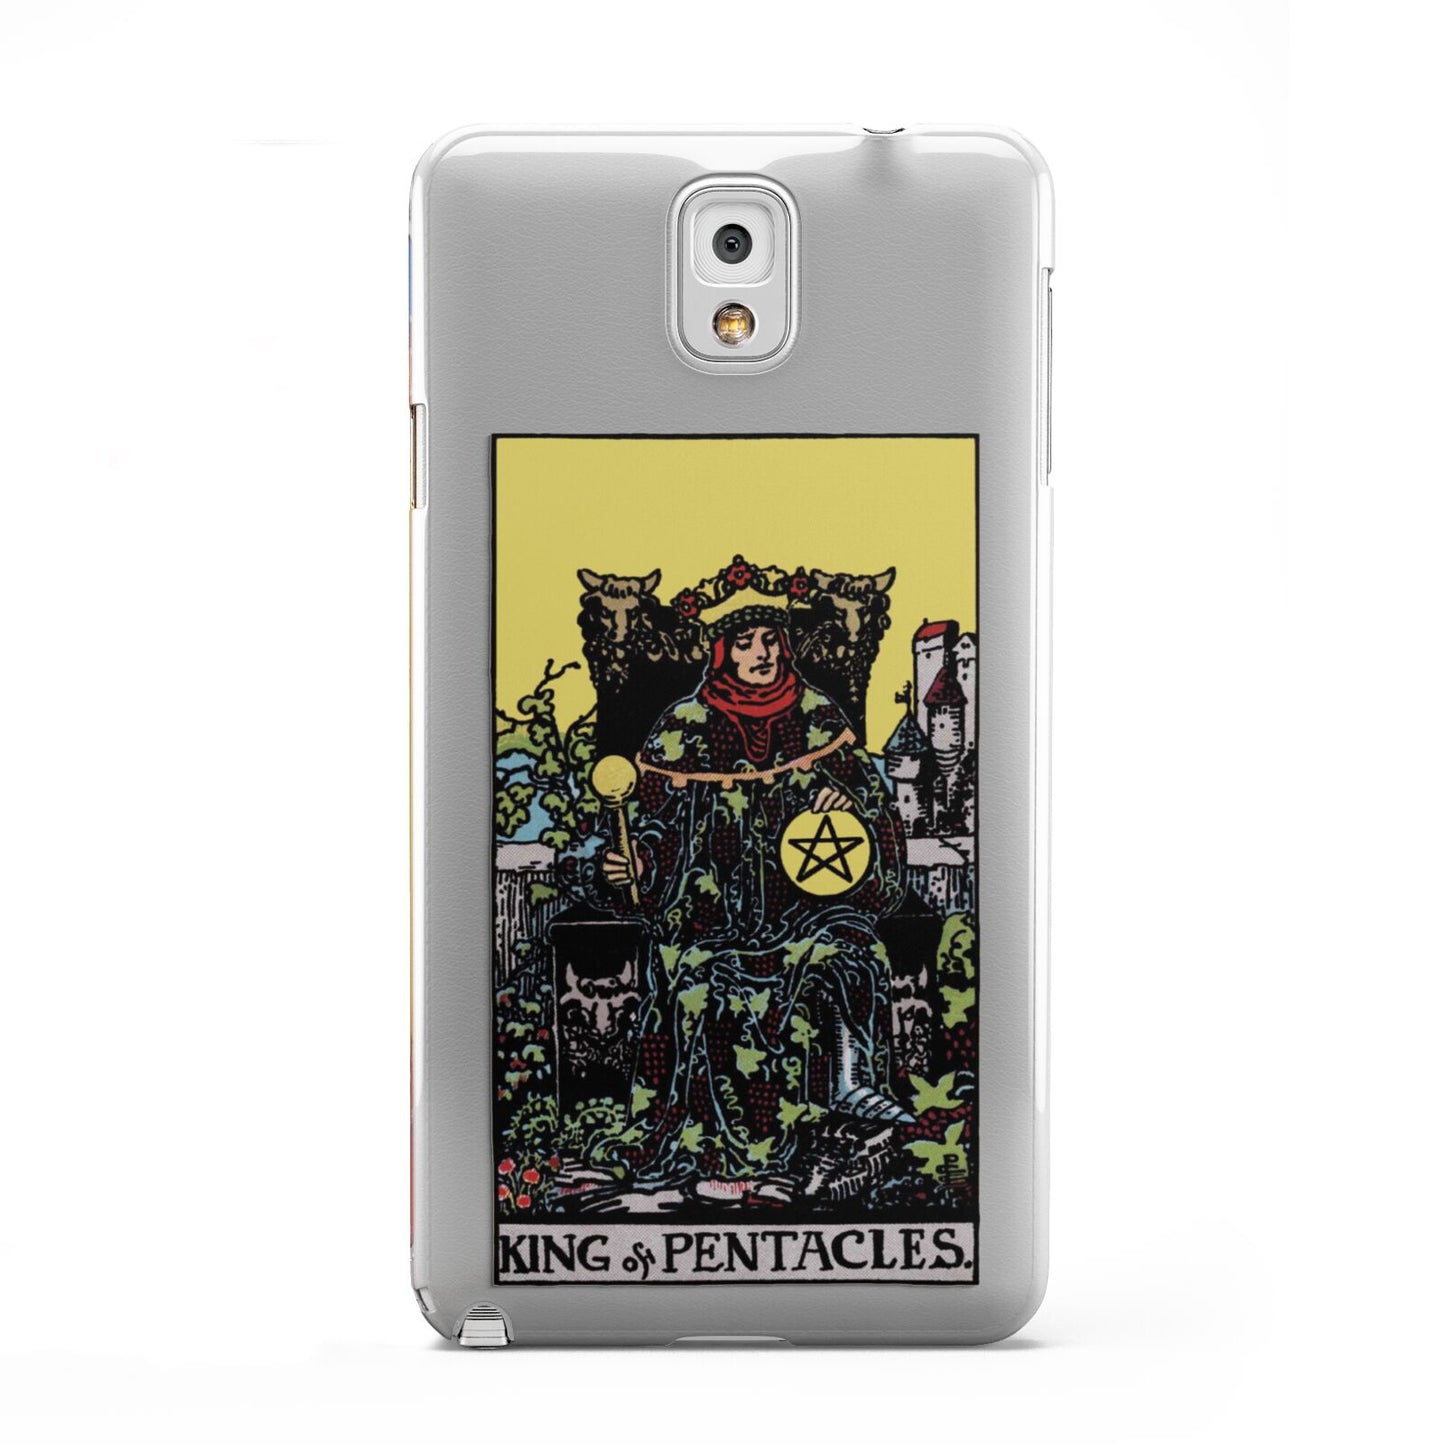 King of Pentacles Tarot Card Samsung Galaxy Note 3 Case